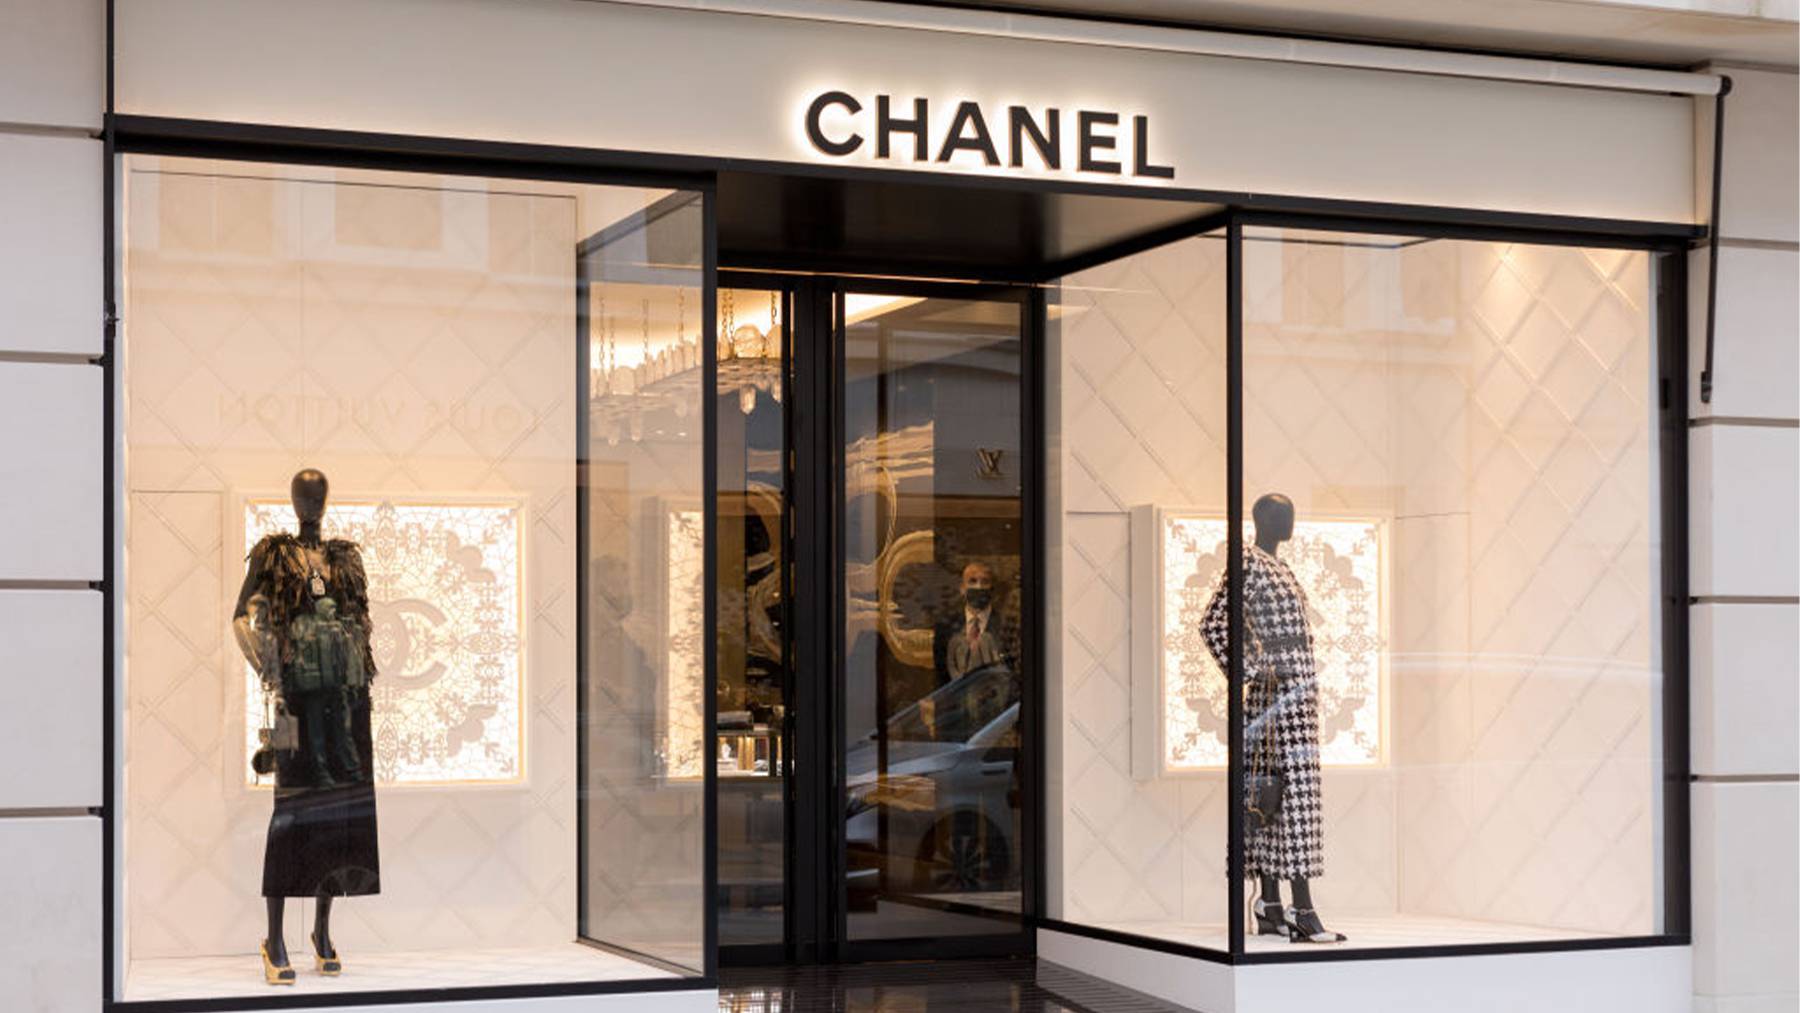 Chanel store on New Bond Street in London.